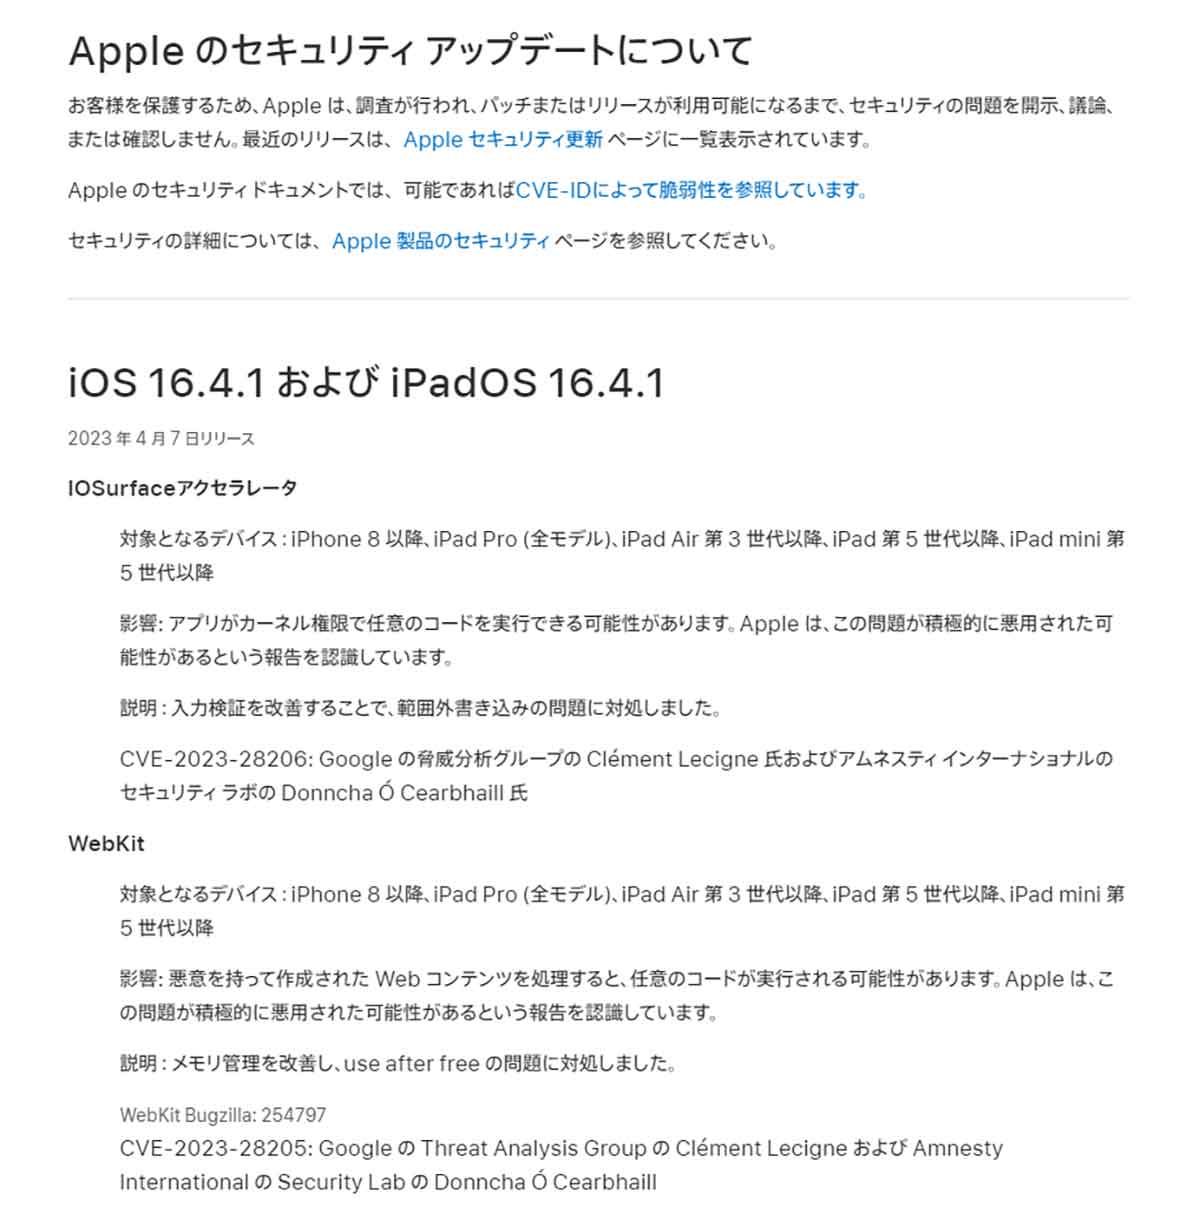 iOS 16.4.1のセキュリティアップデートの内容